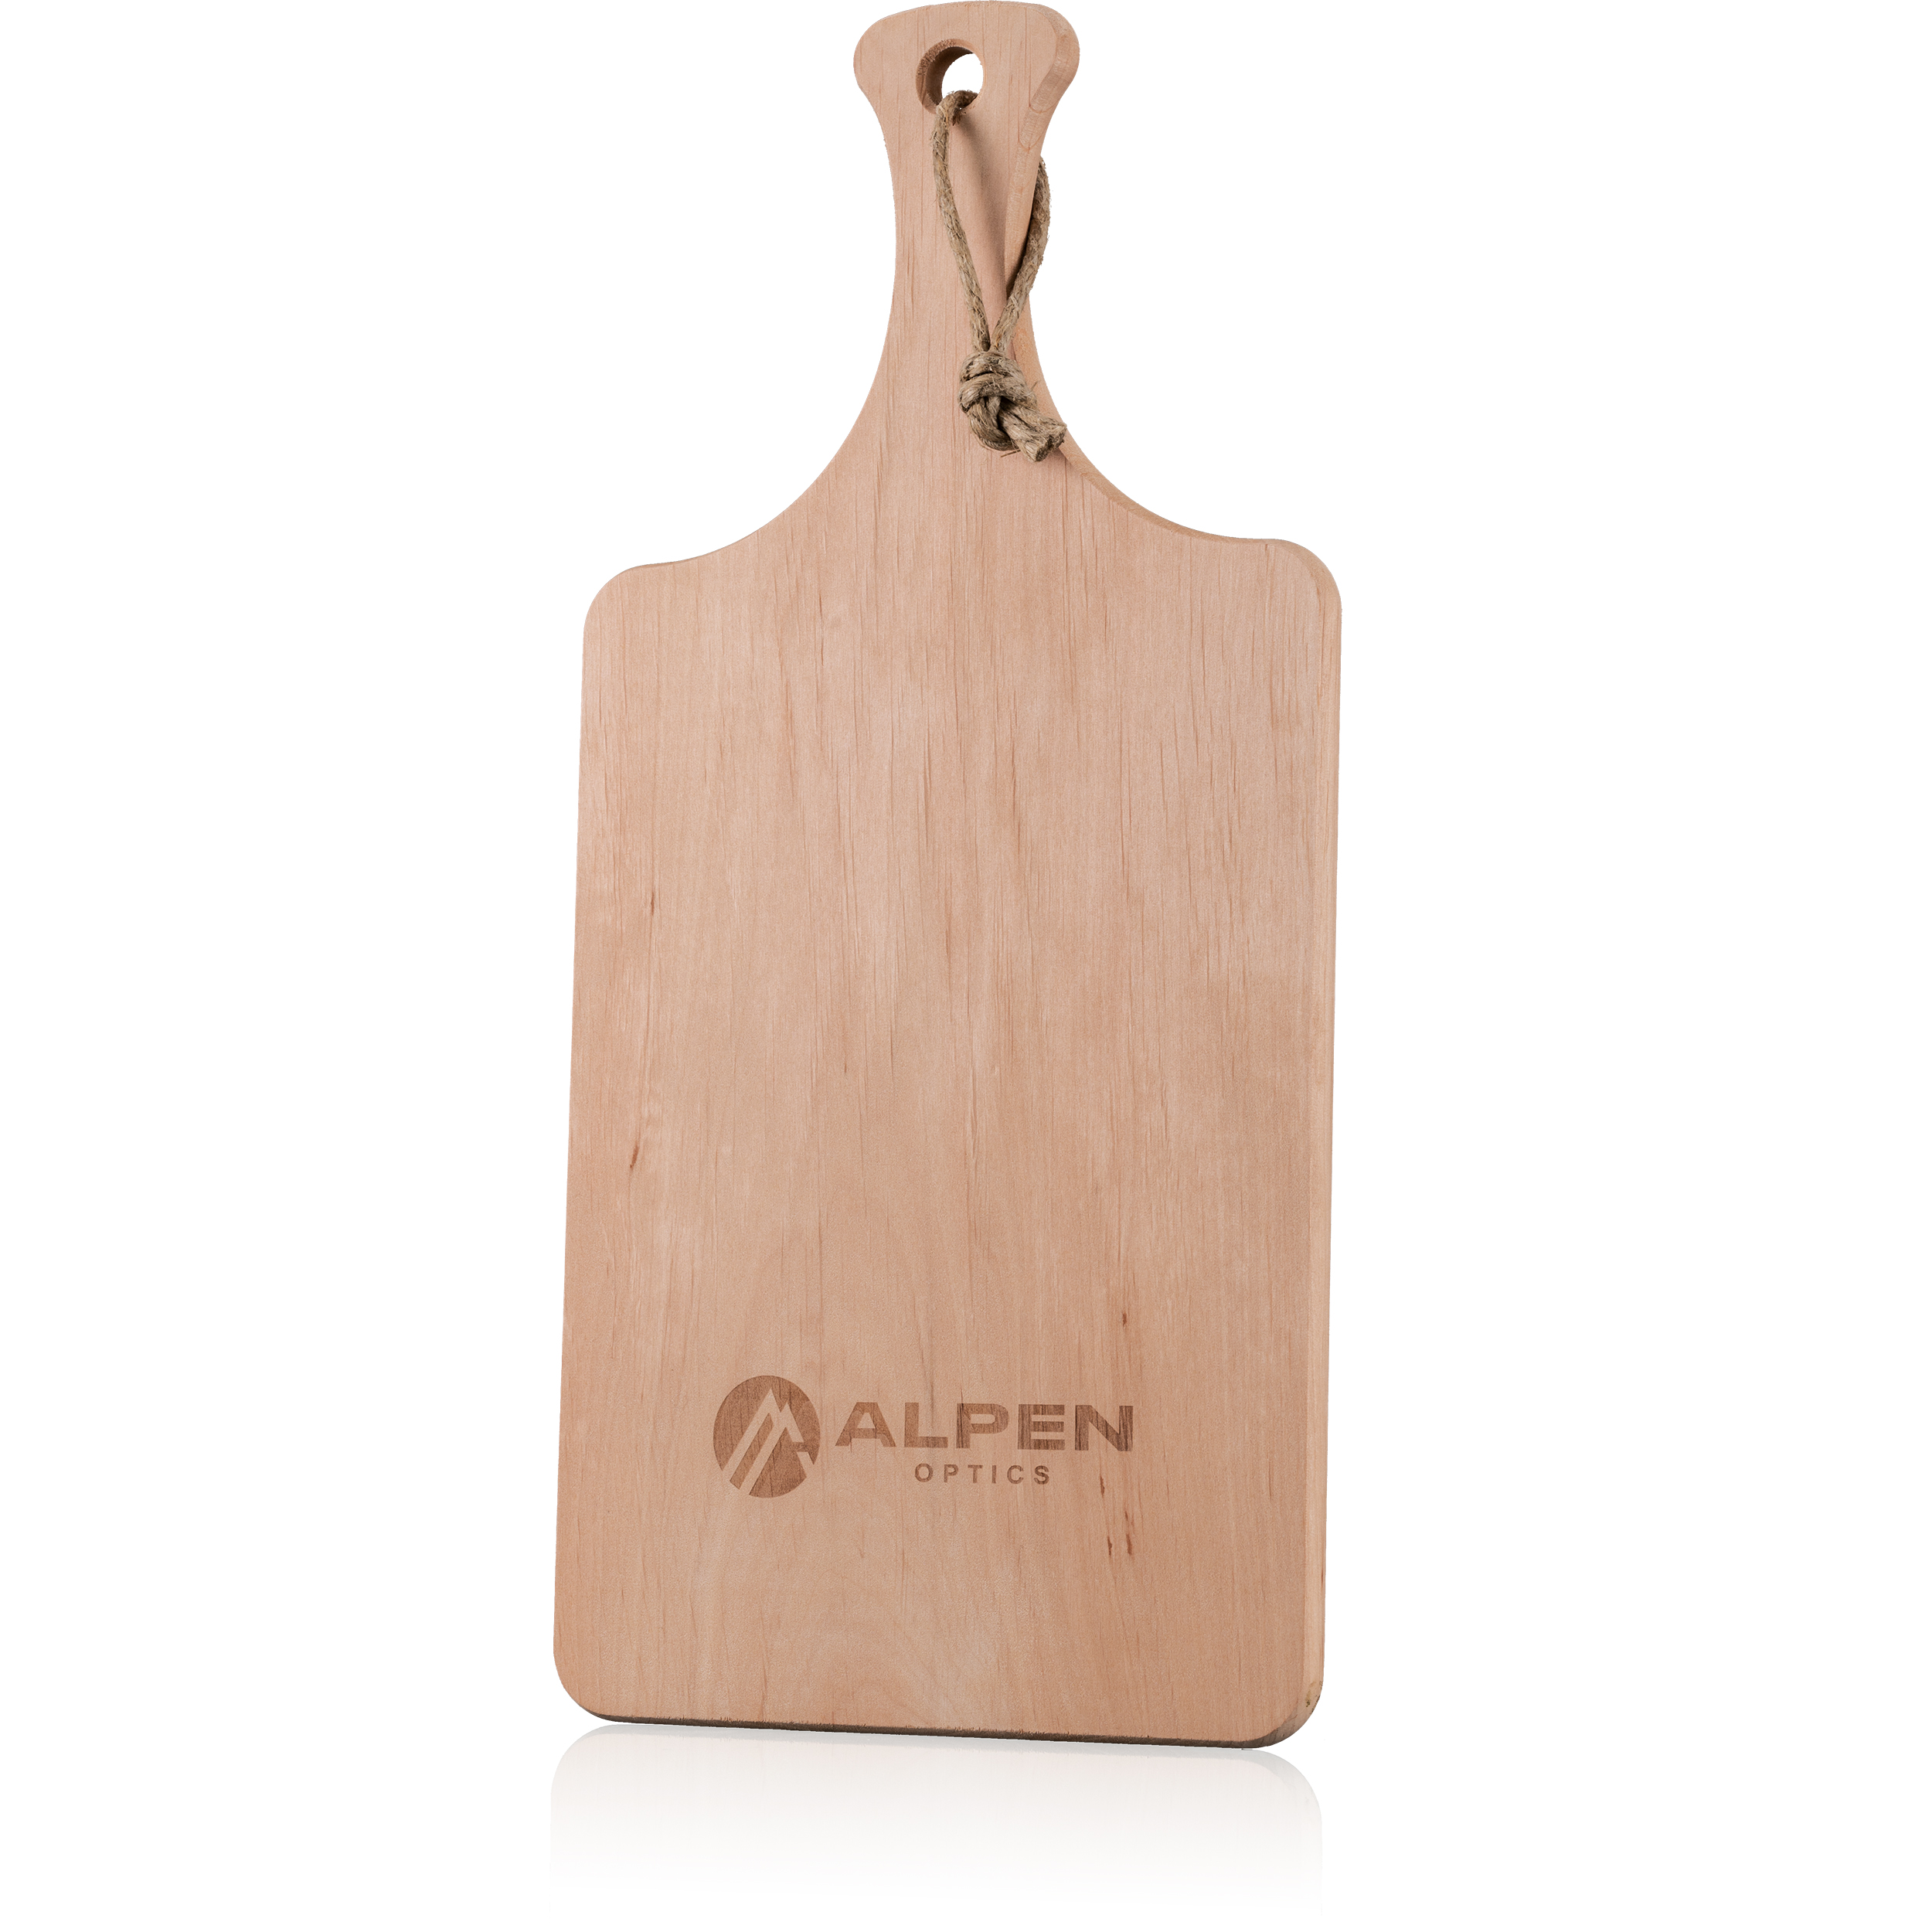 ALPEN Original Wooden Board